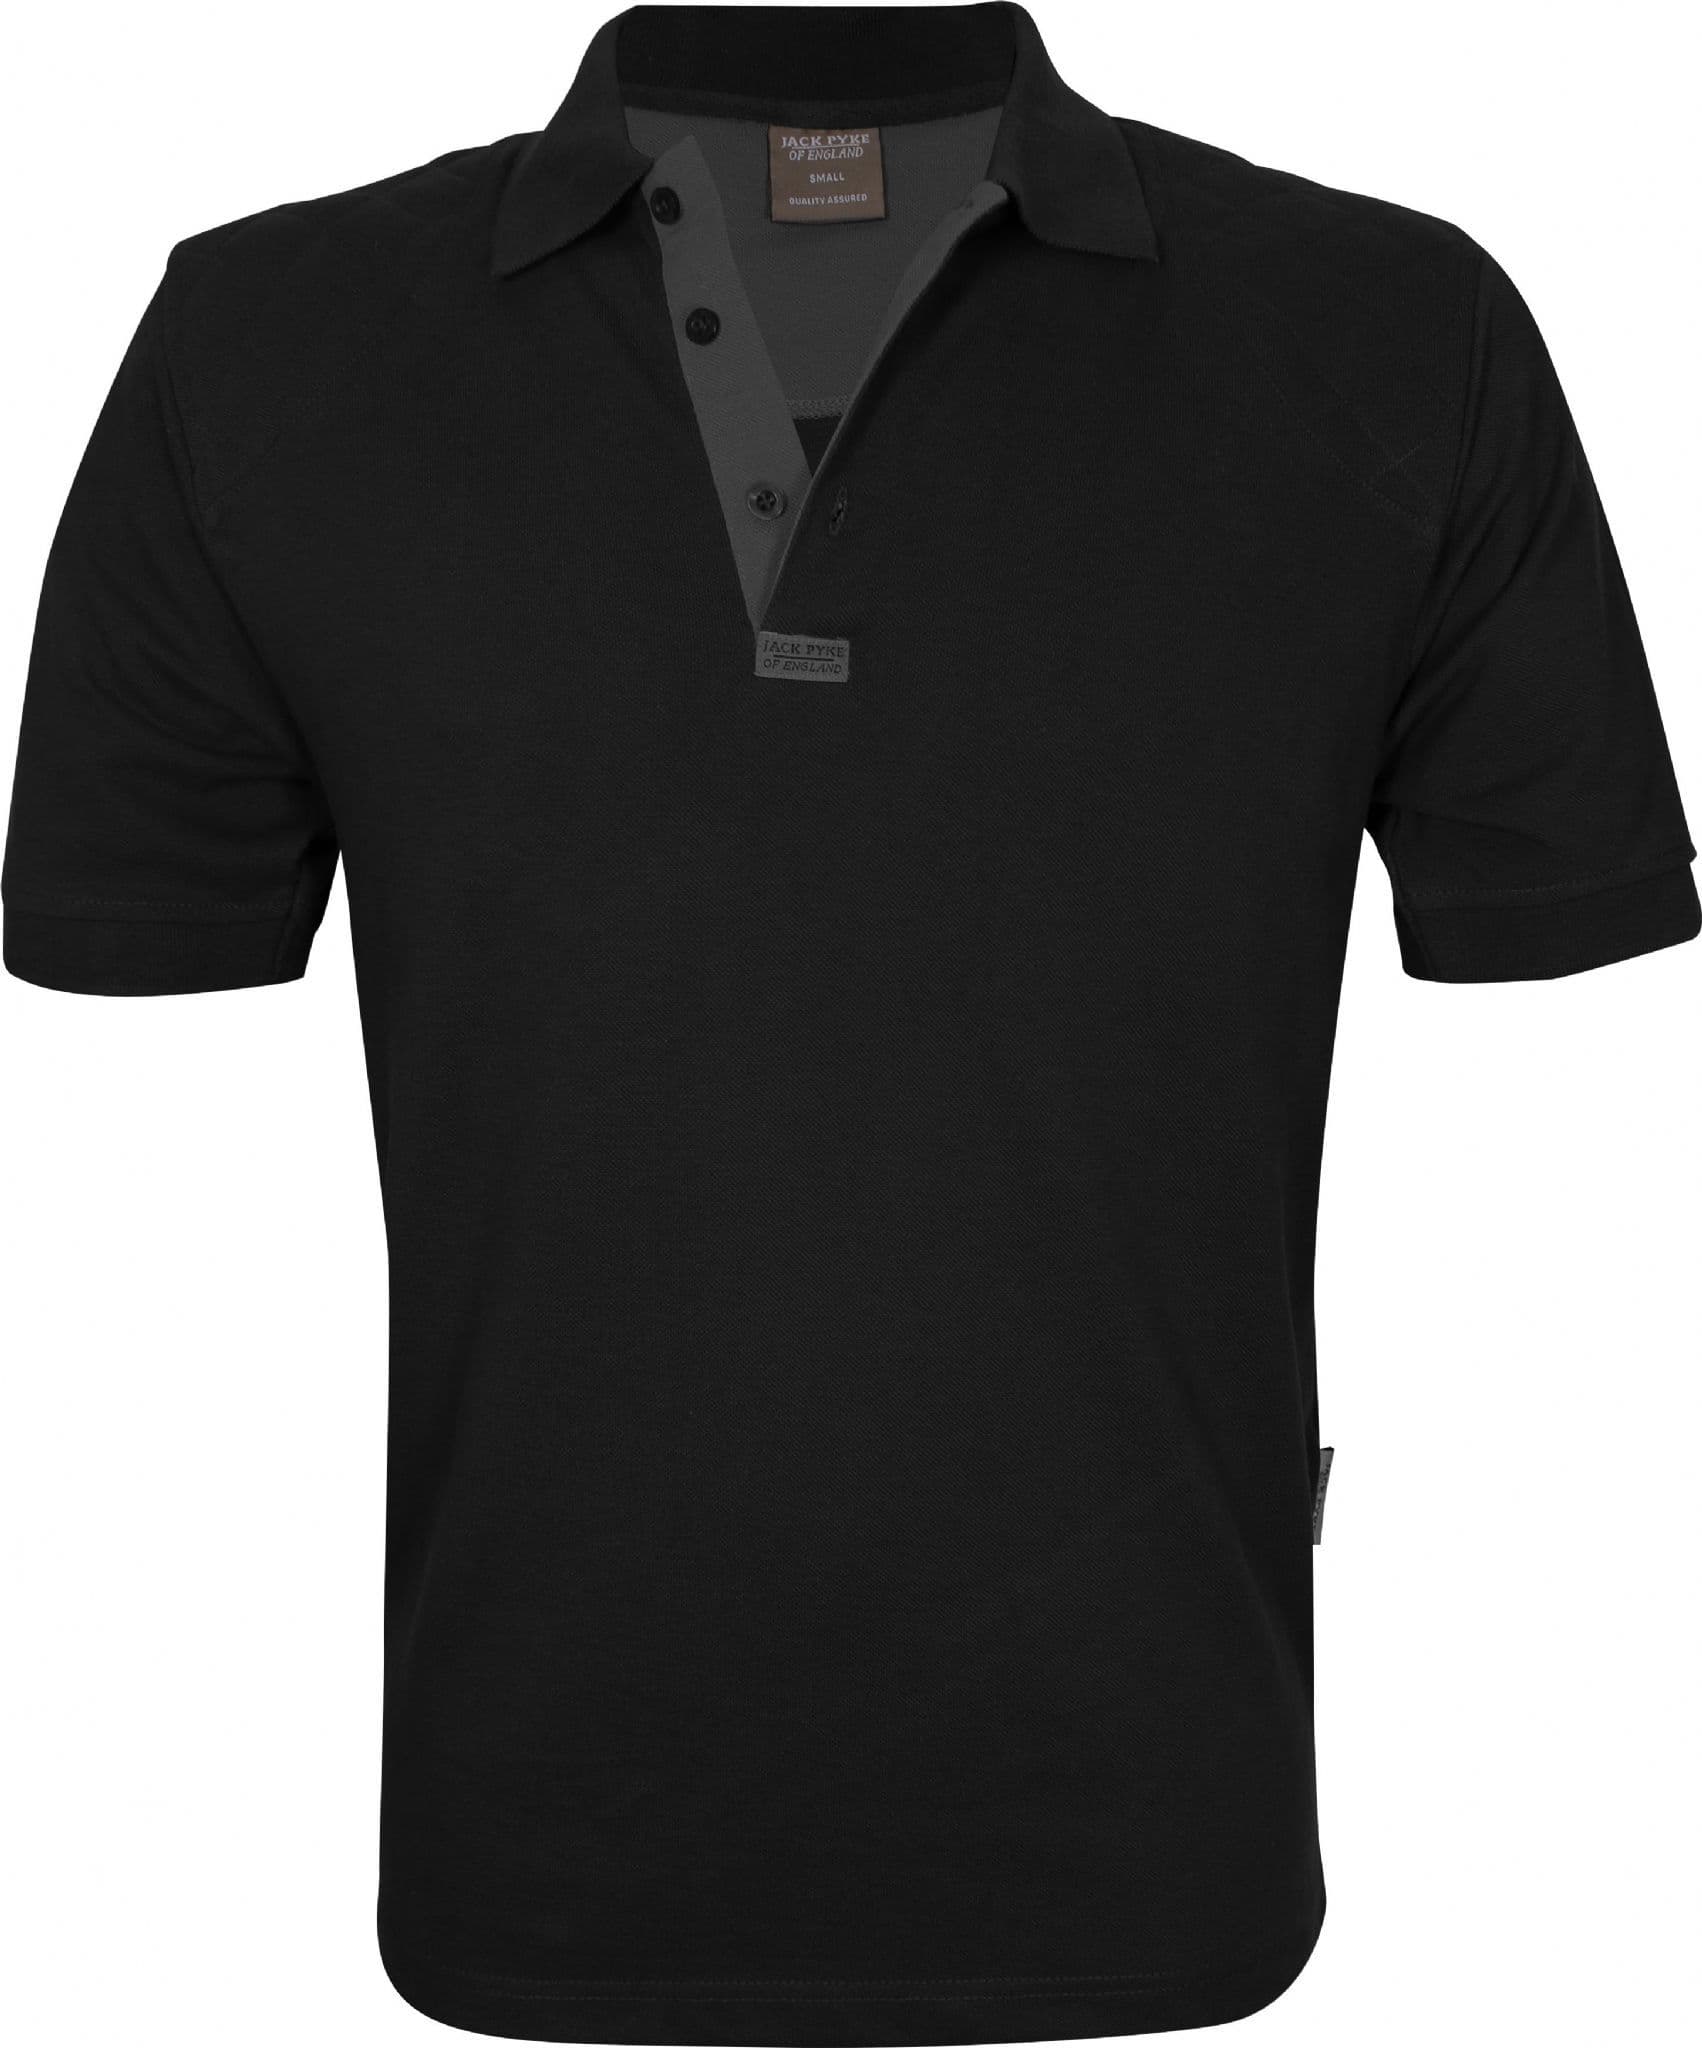 Jack Pyke Sporting Polo Shirt - Black